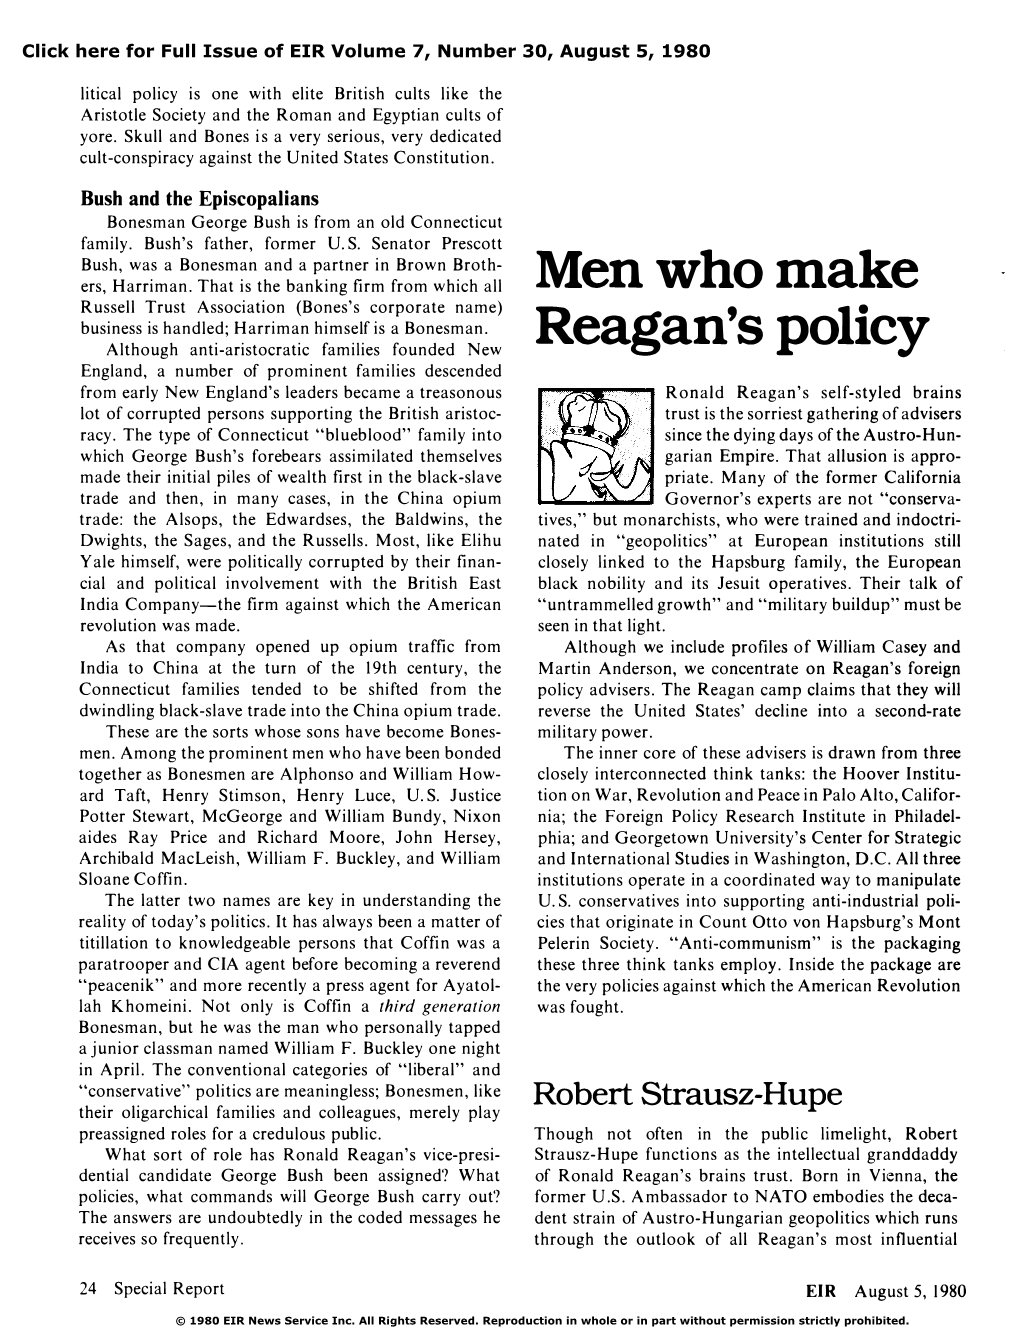 Men Who Make Reagan's Policy